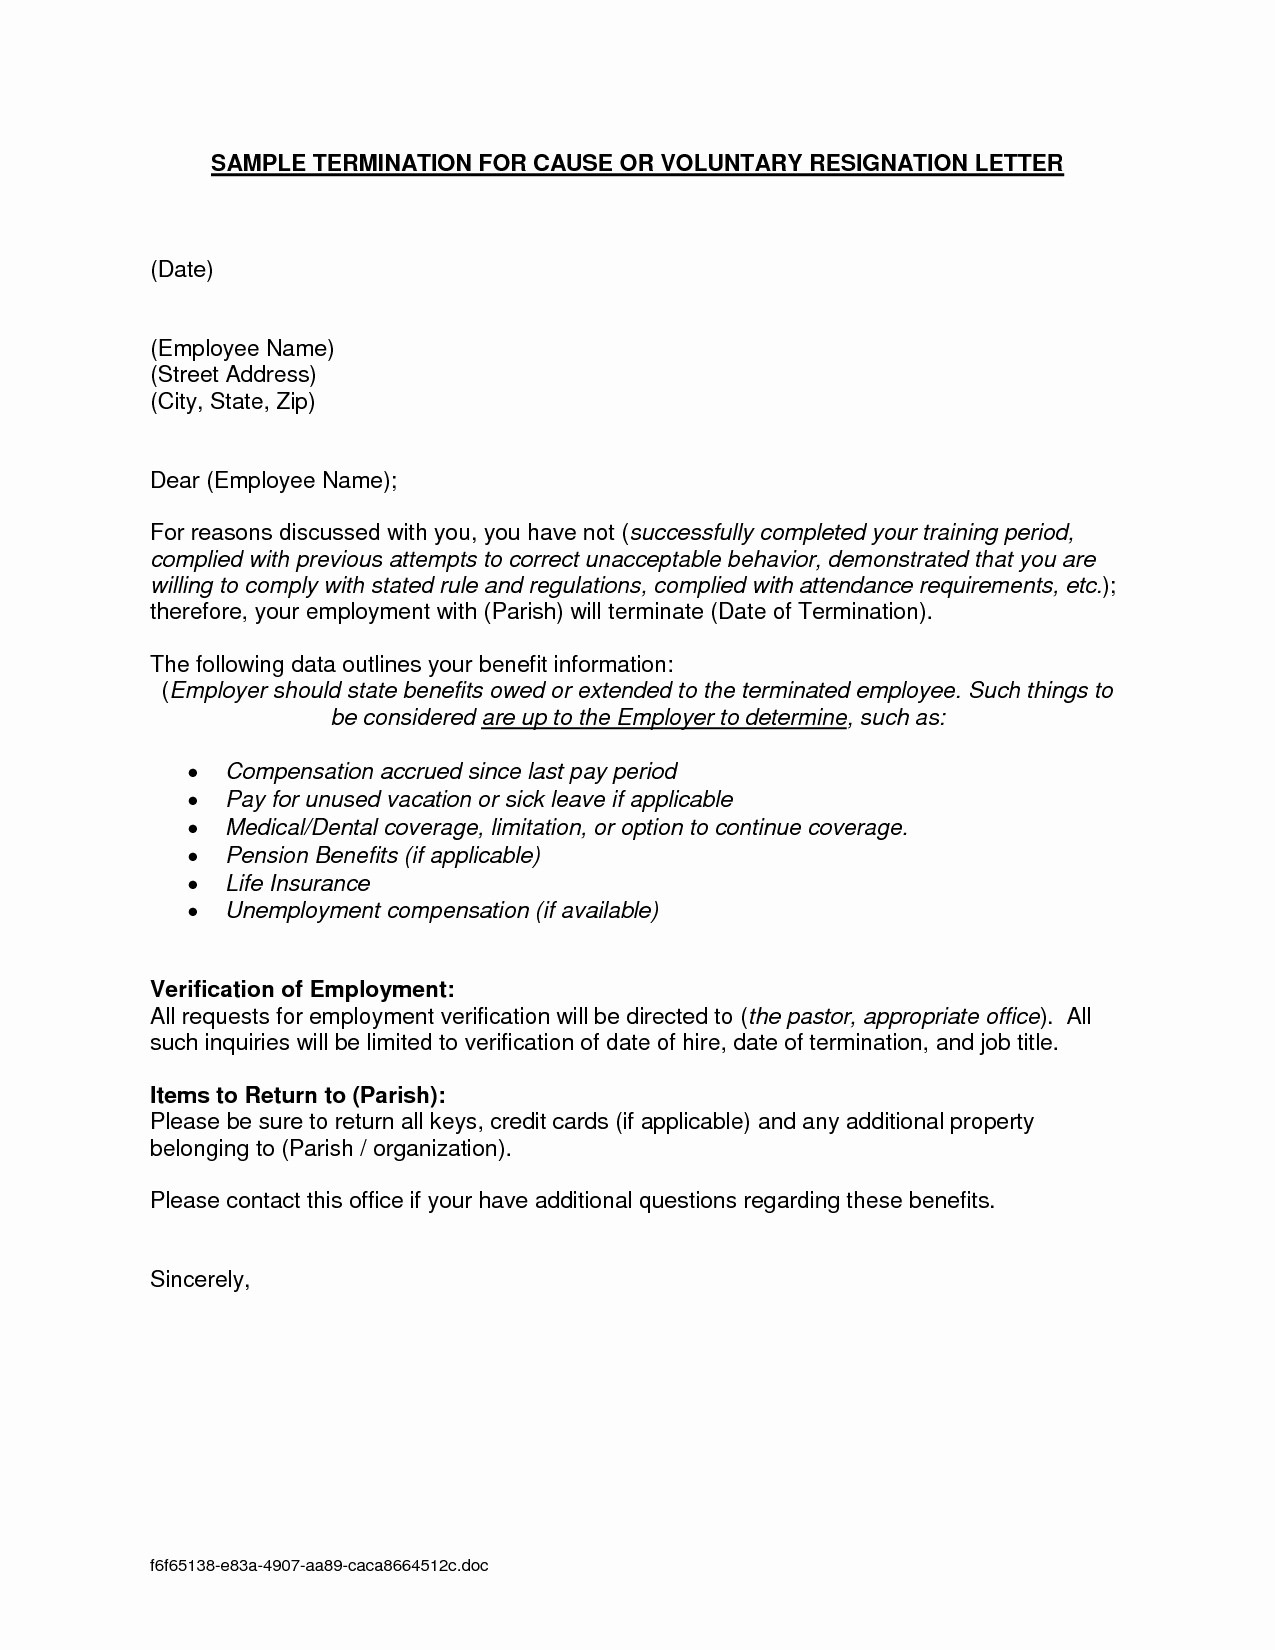 Letter Termination Employment